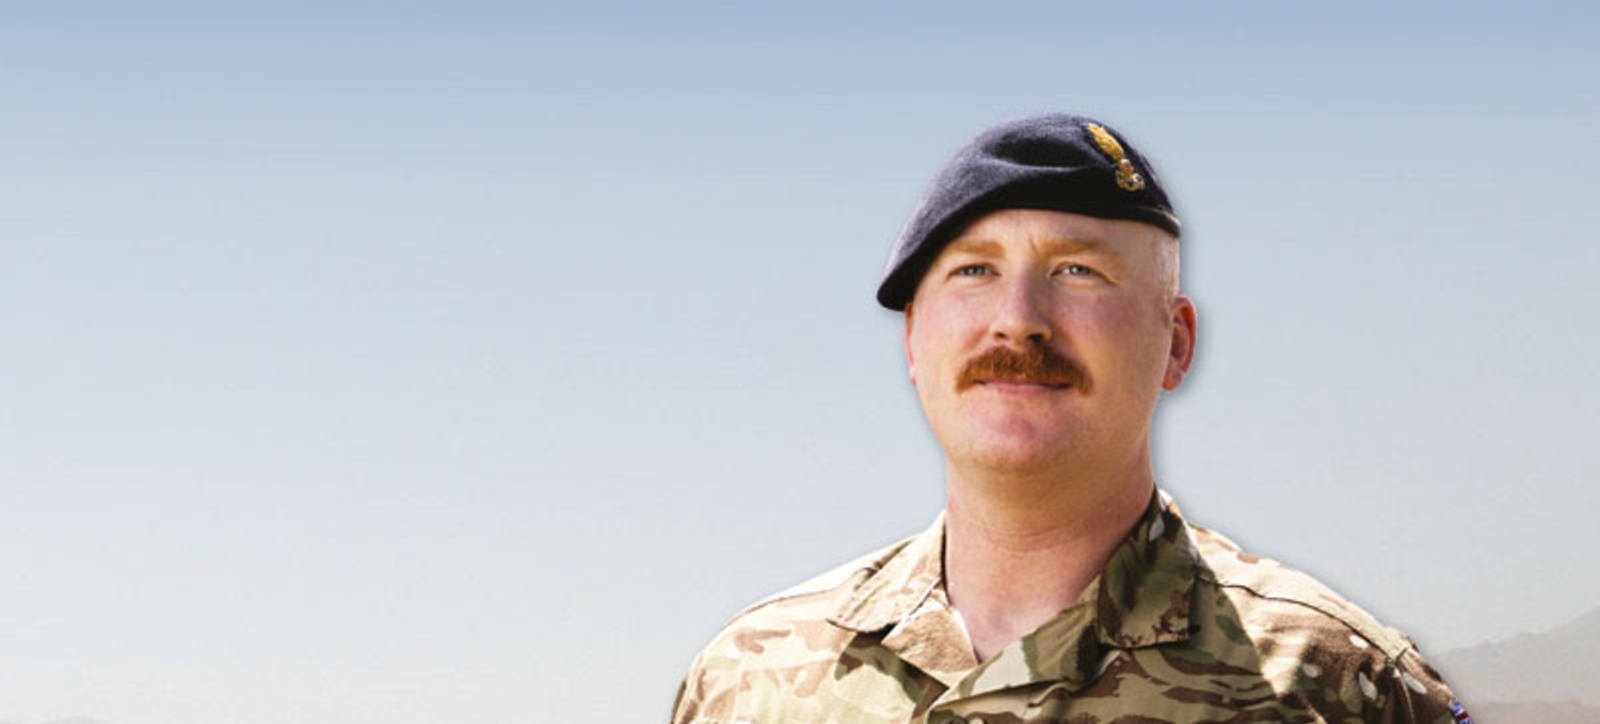 Major Luke Parker, who provided vital data analysis to help the UK's Covid-19 response